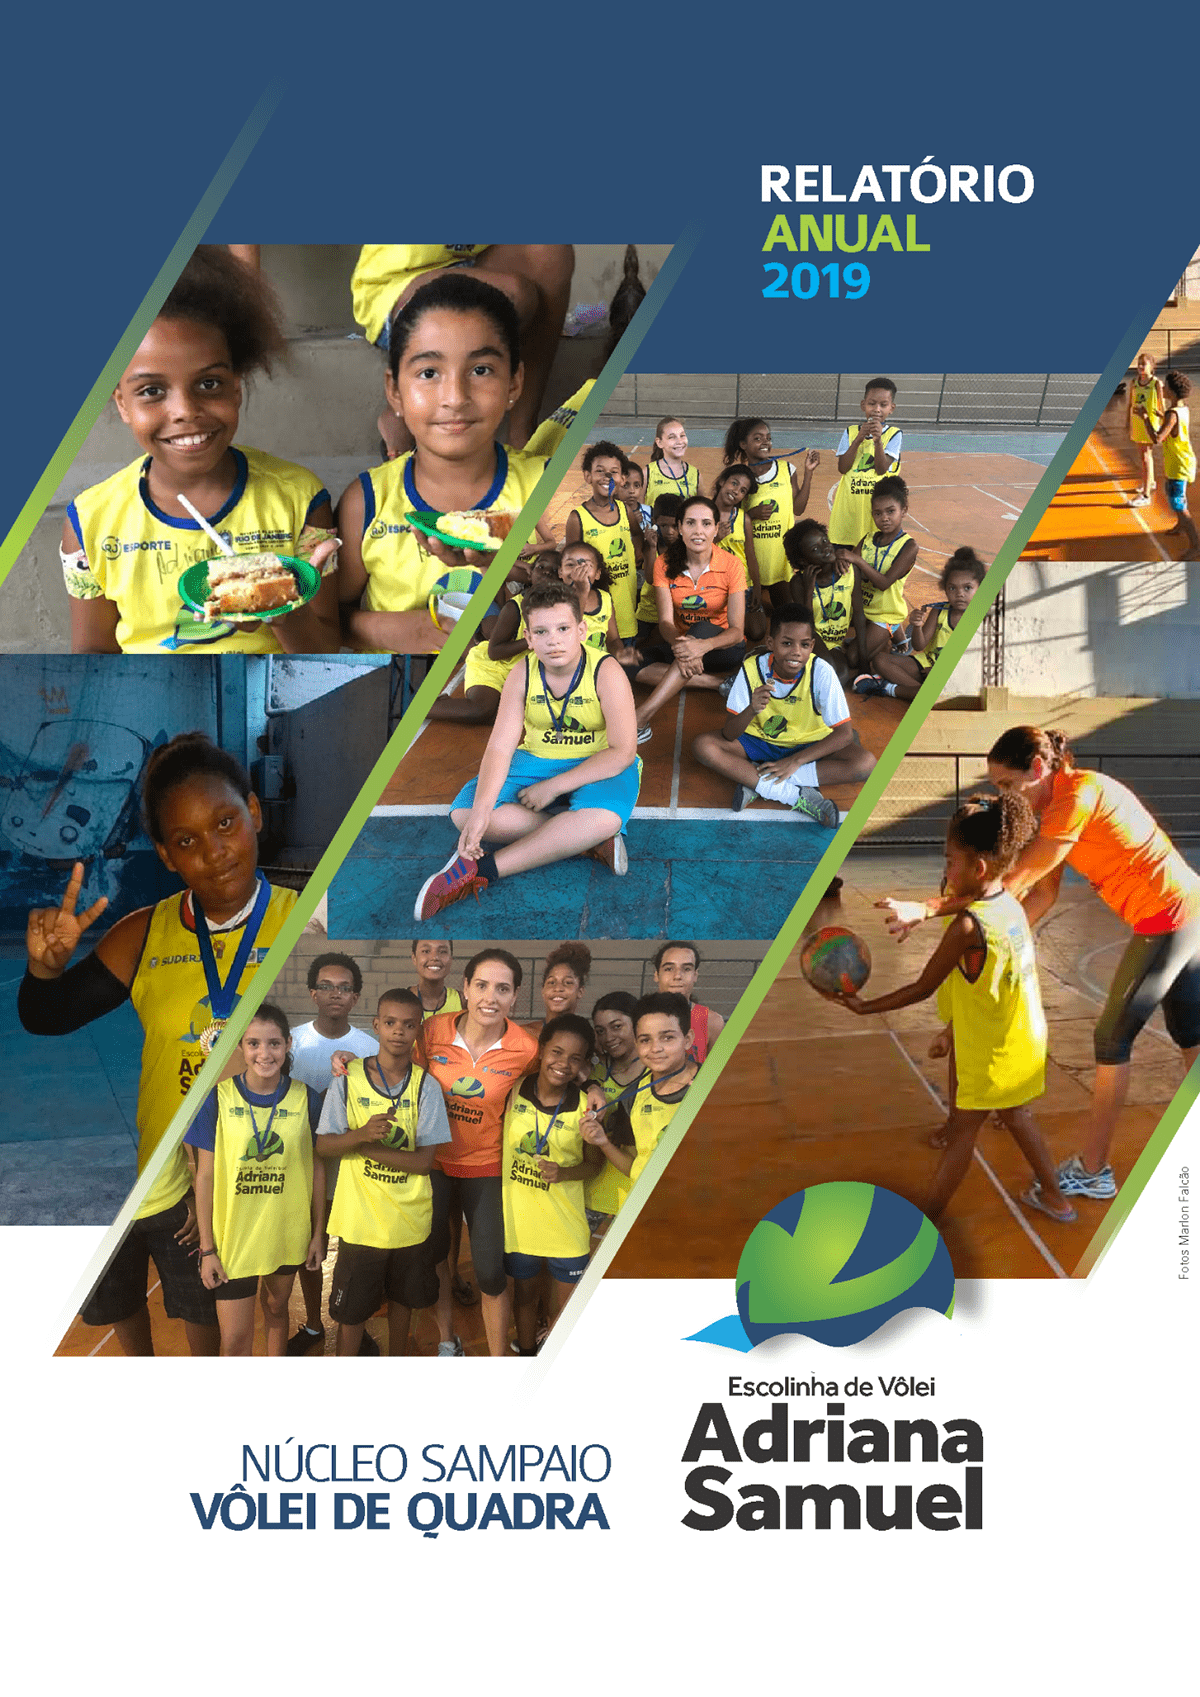 anual report design sports